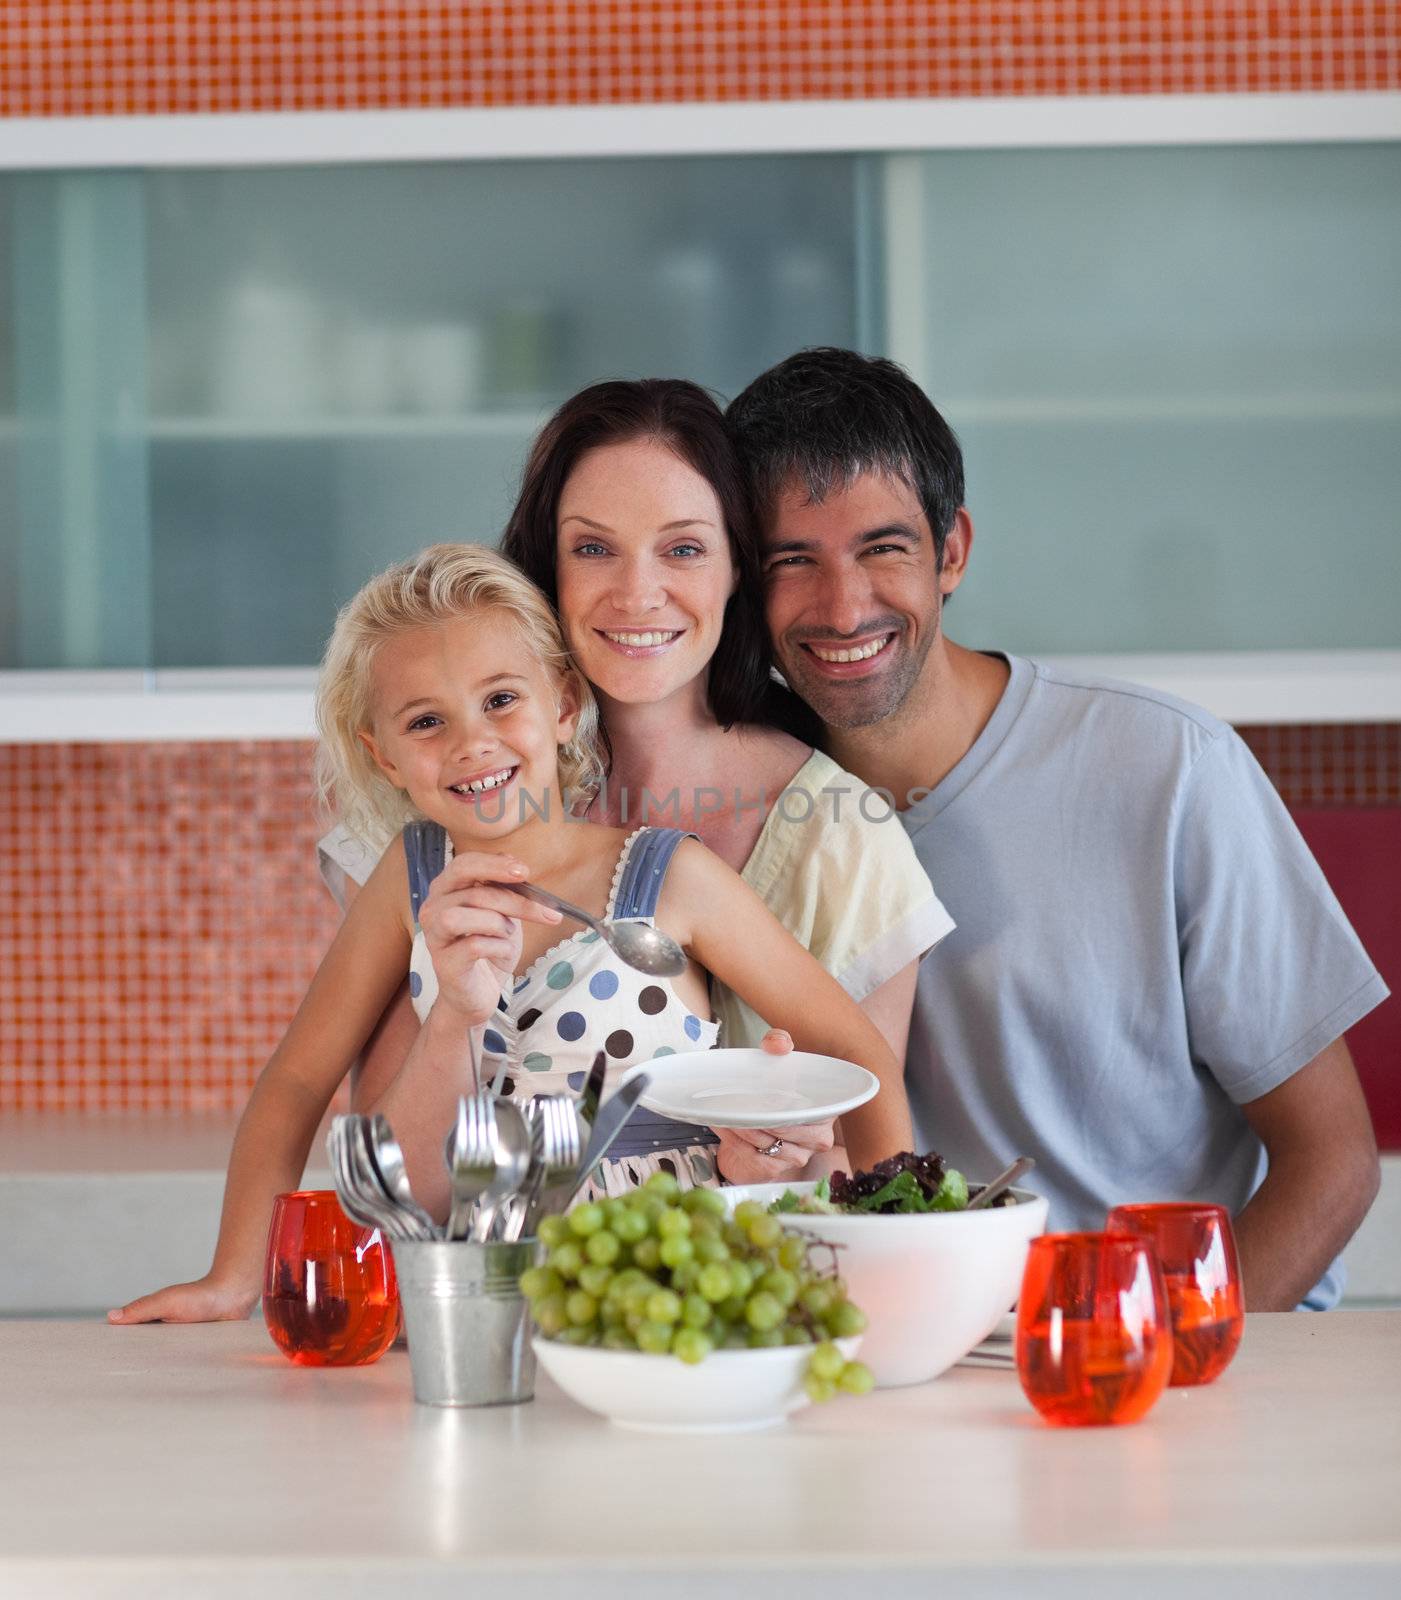 Happy familie in the kitchen by Wavebreakmedia